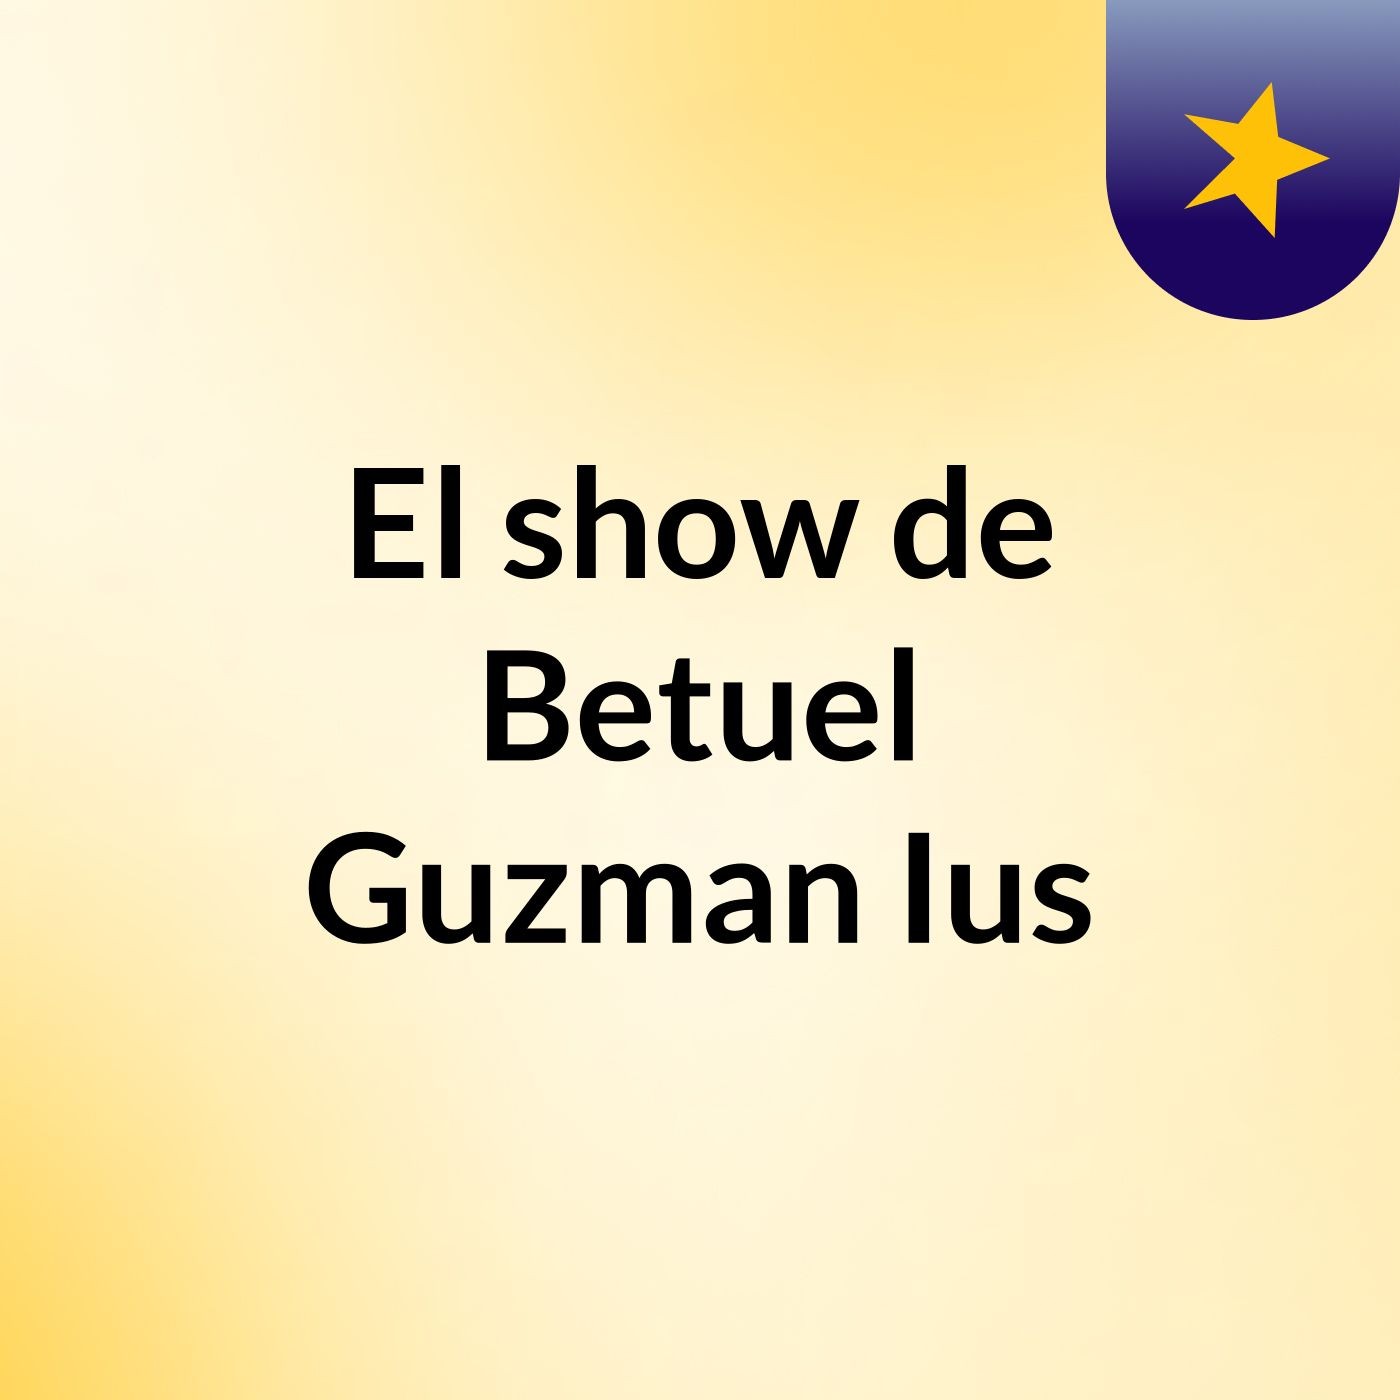 El show de Betuel Guzman Ius